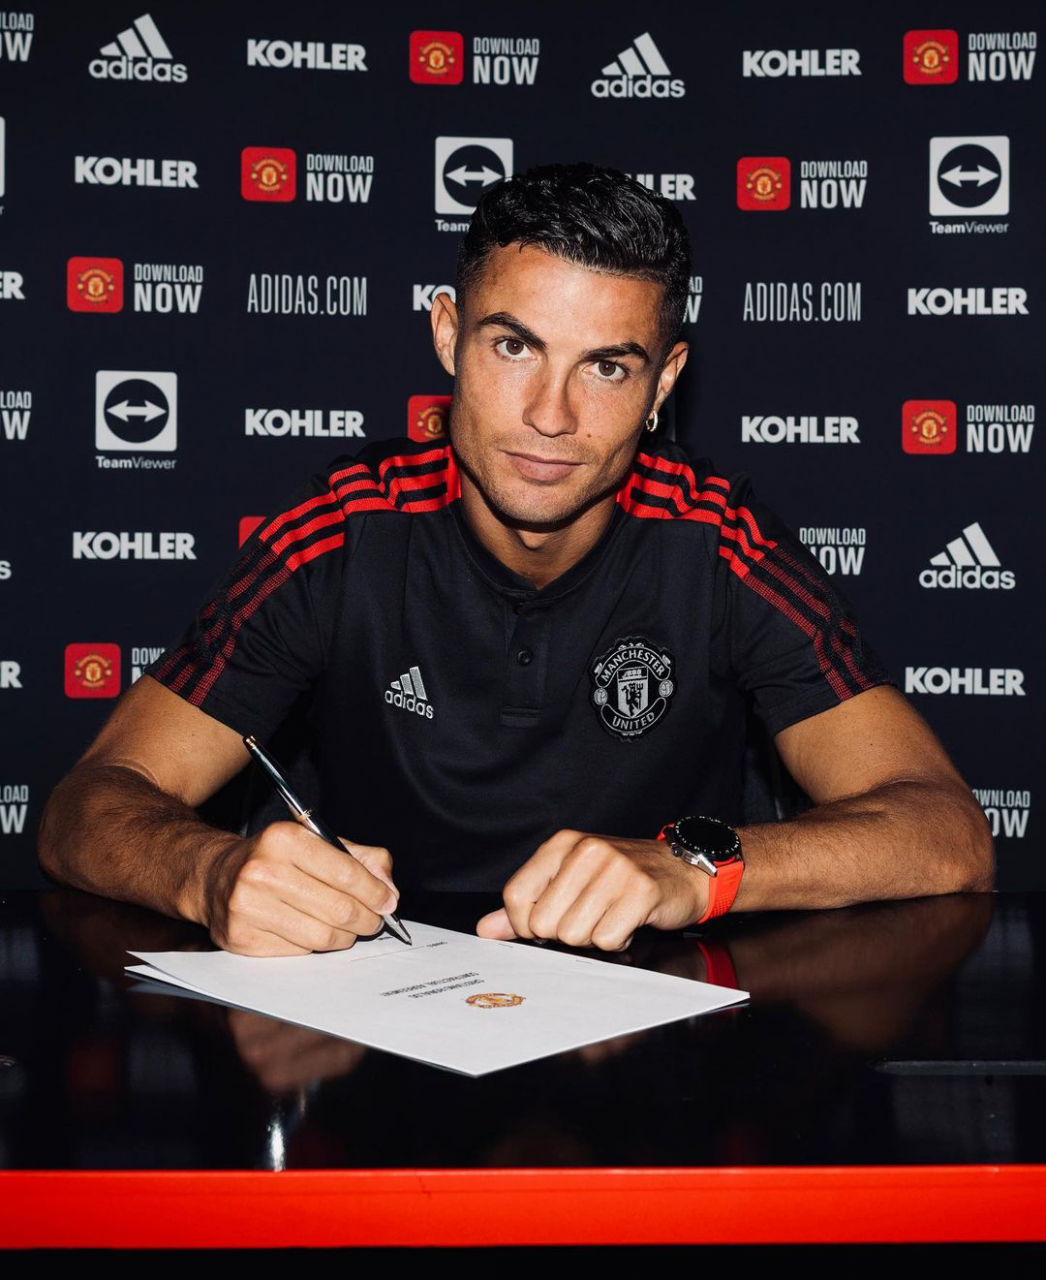 Manchester United release official photos of Cristiano Ronaldo